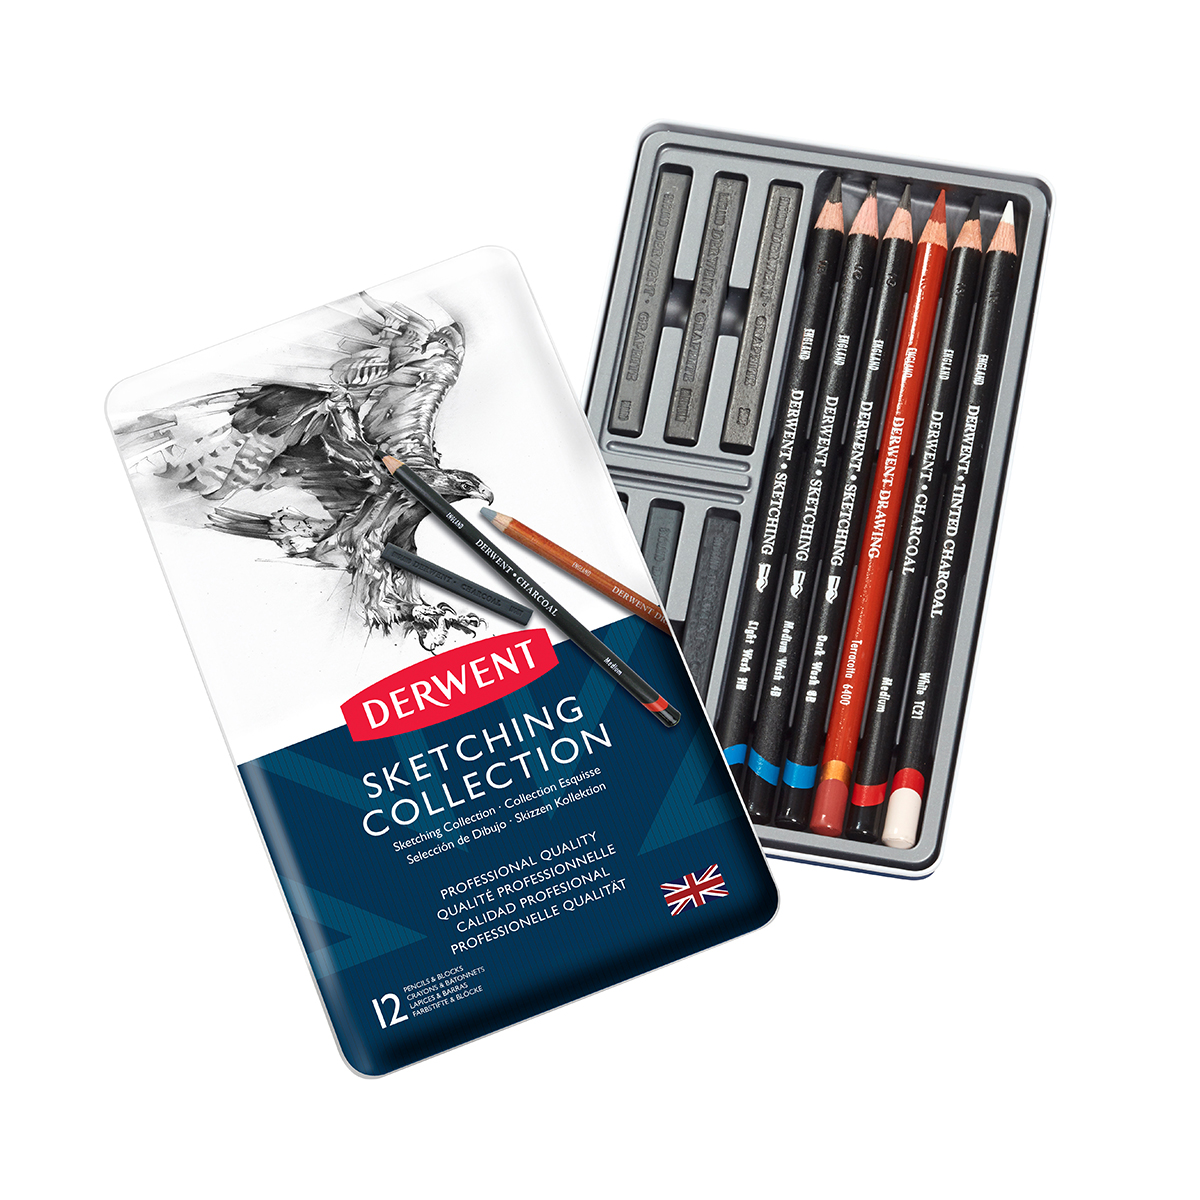 Derwent Academy Metal Case with 12 Colored Pencils - Εικαστικός Κόσμος